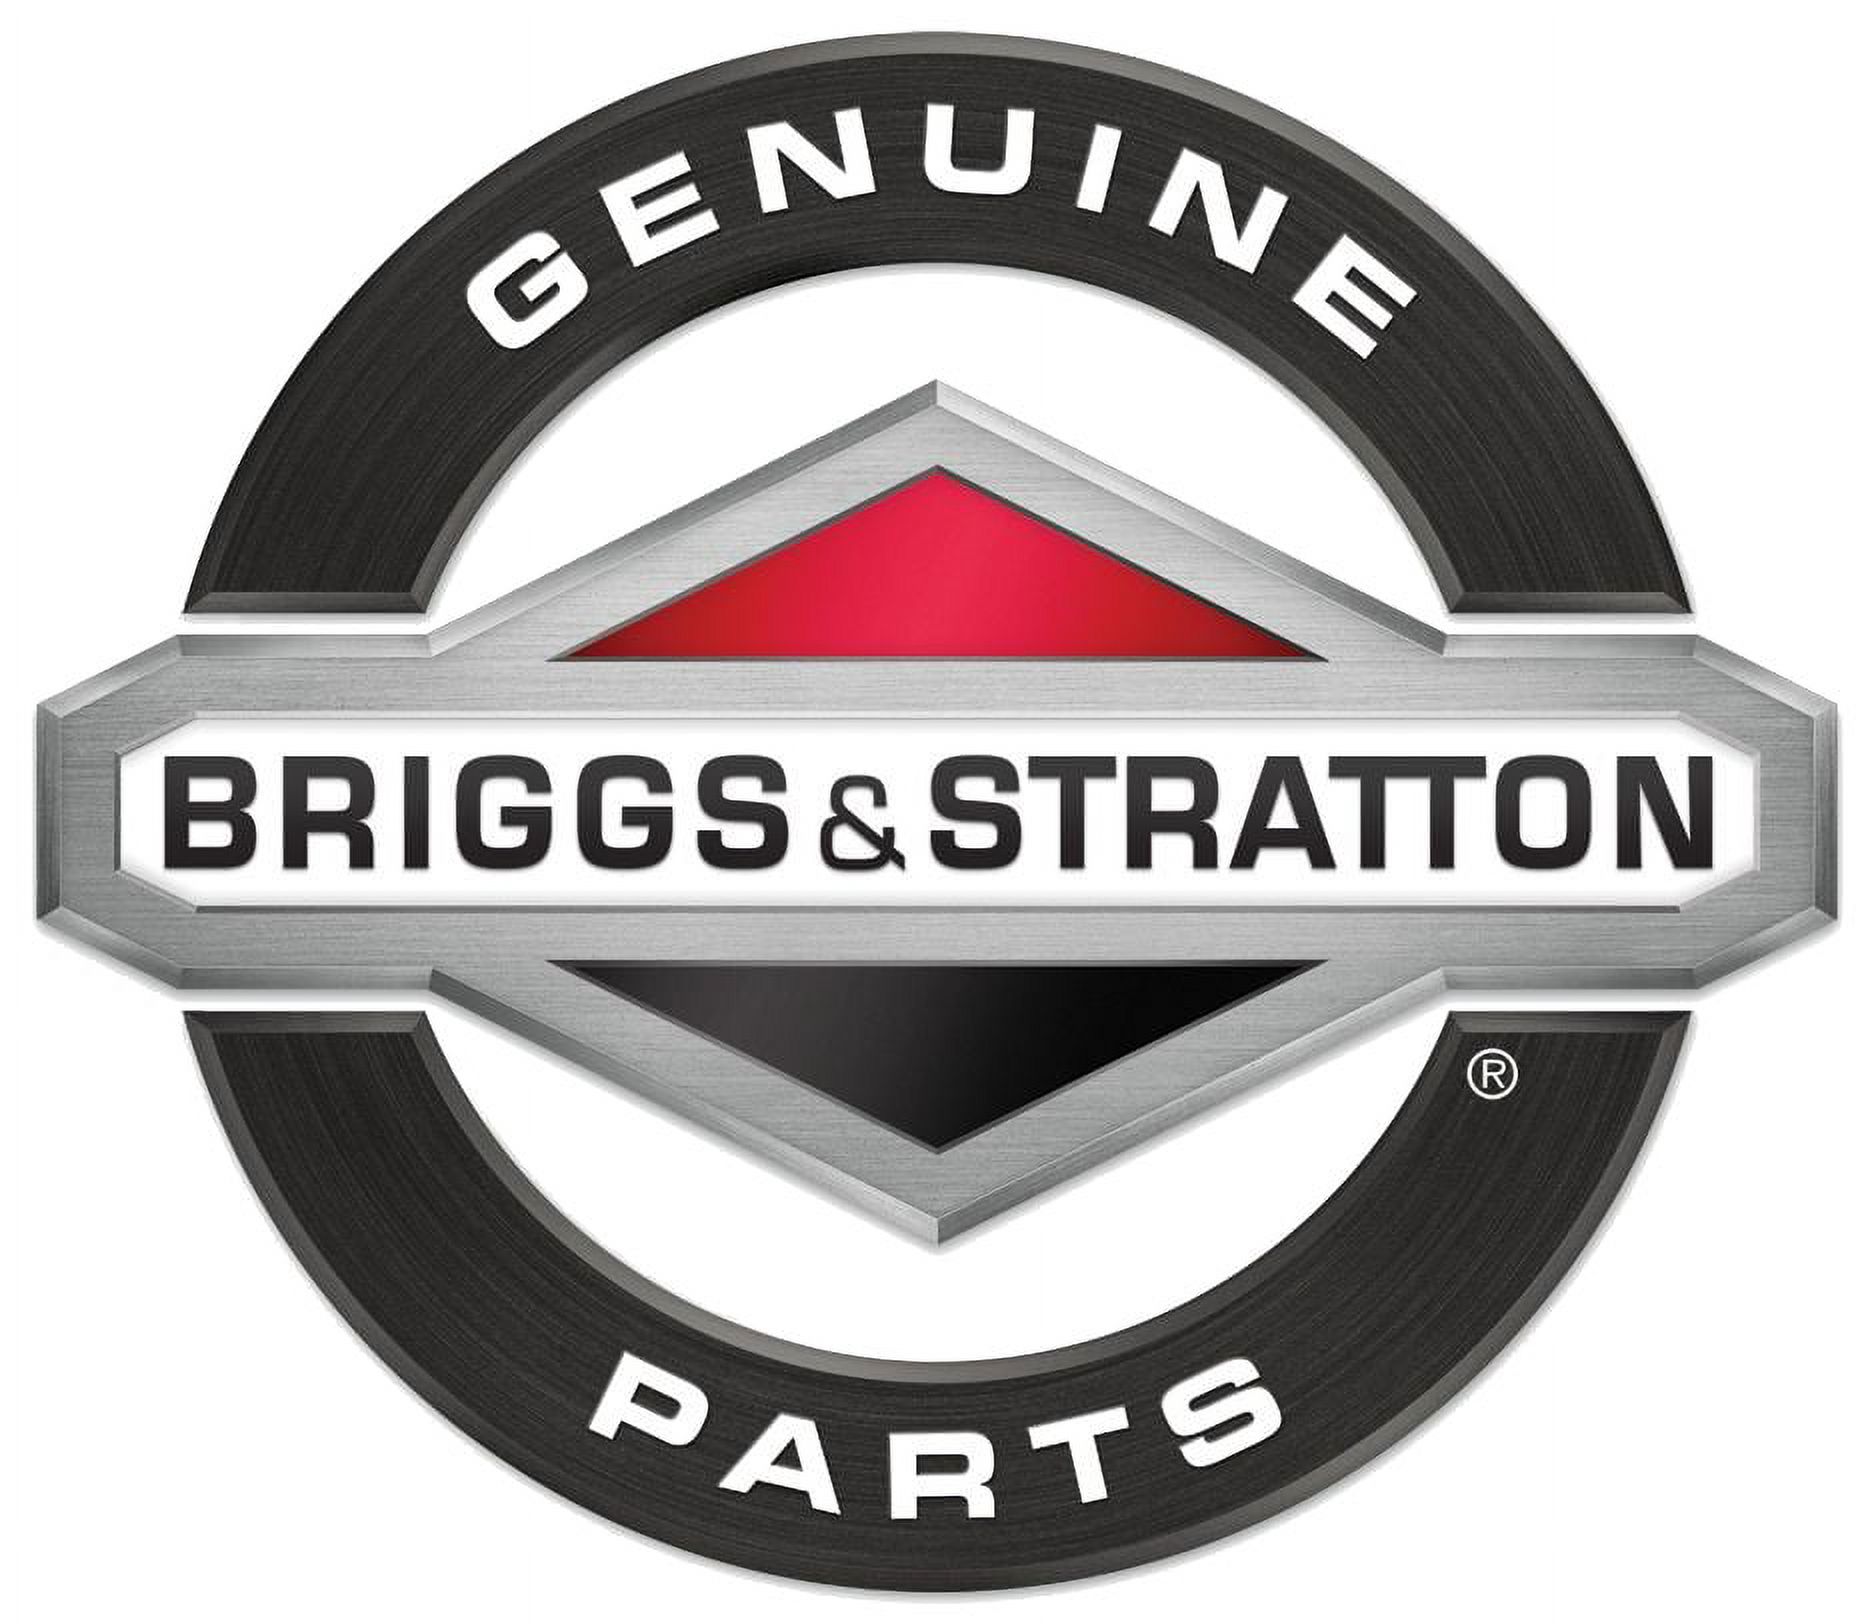 Genuine Briggs & Stratton 391086s Oil Seal Replaces 298423 391086 OEM - image 4 of 4